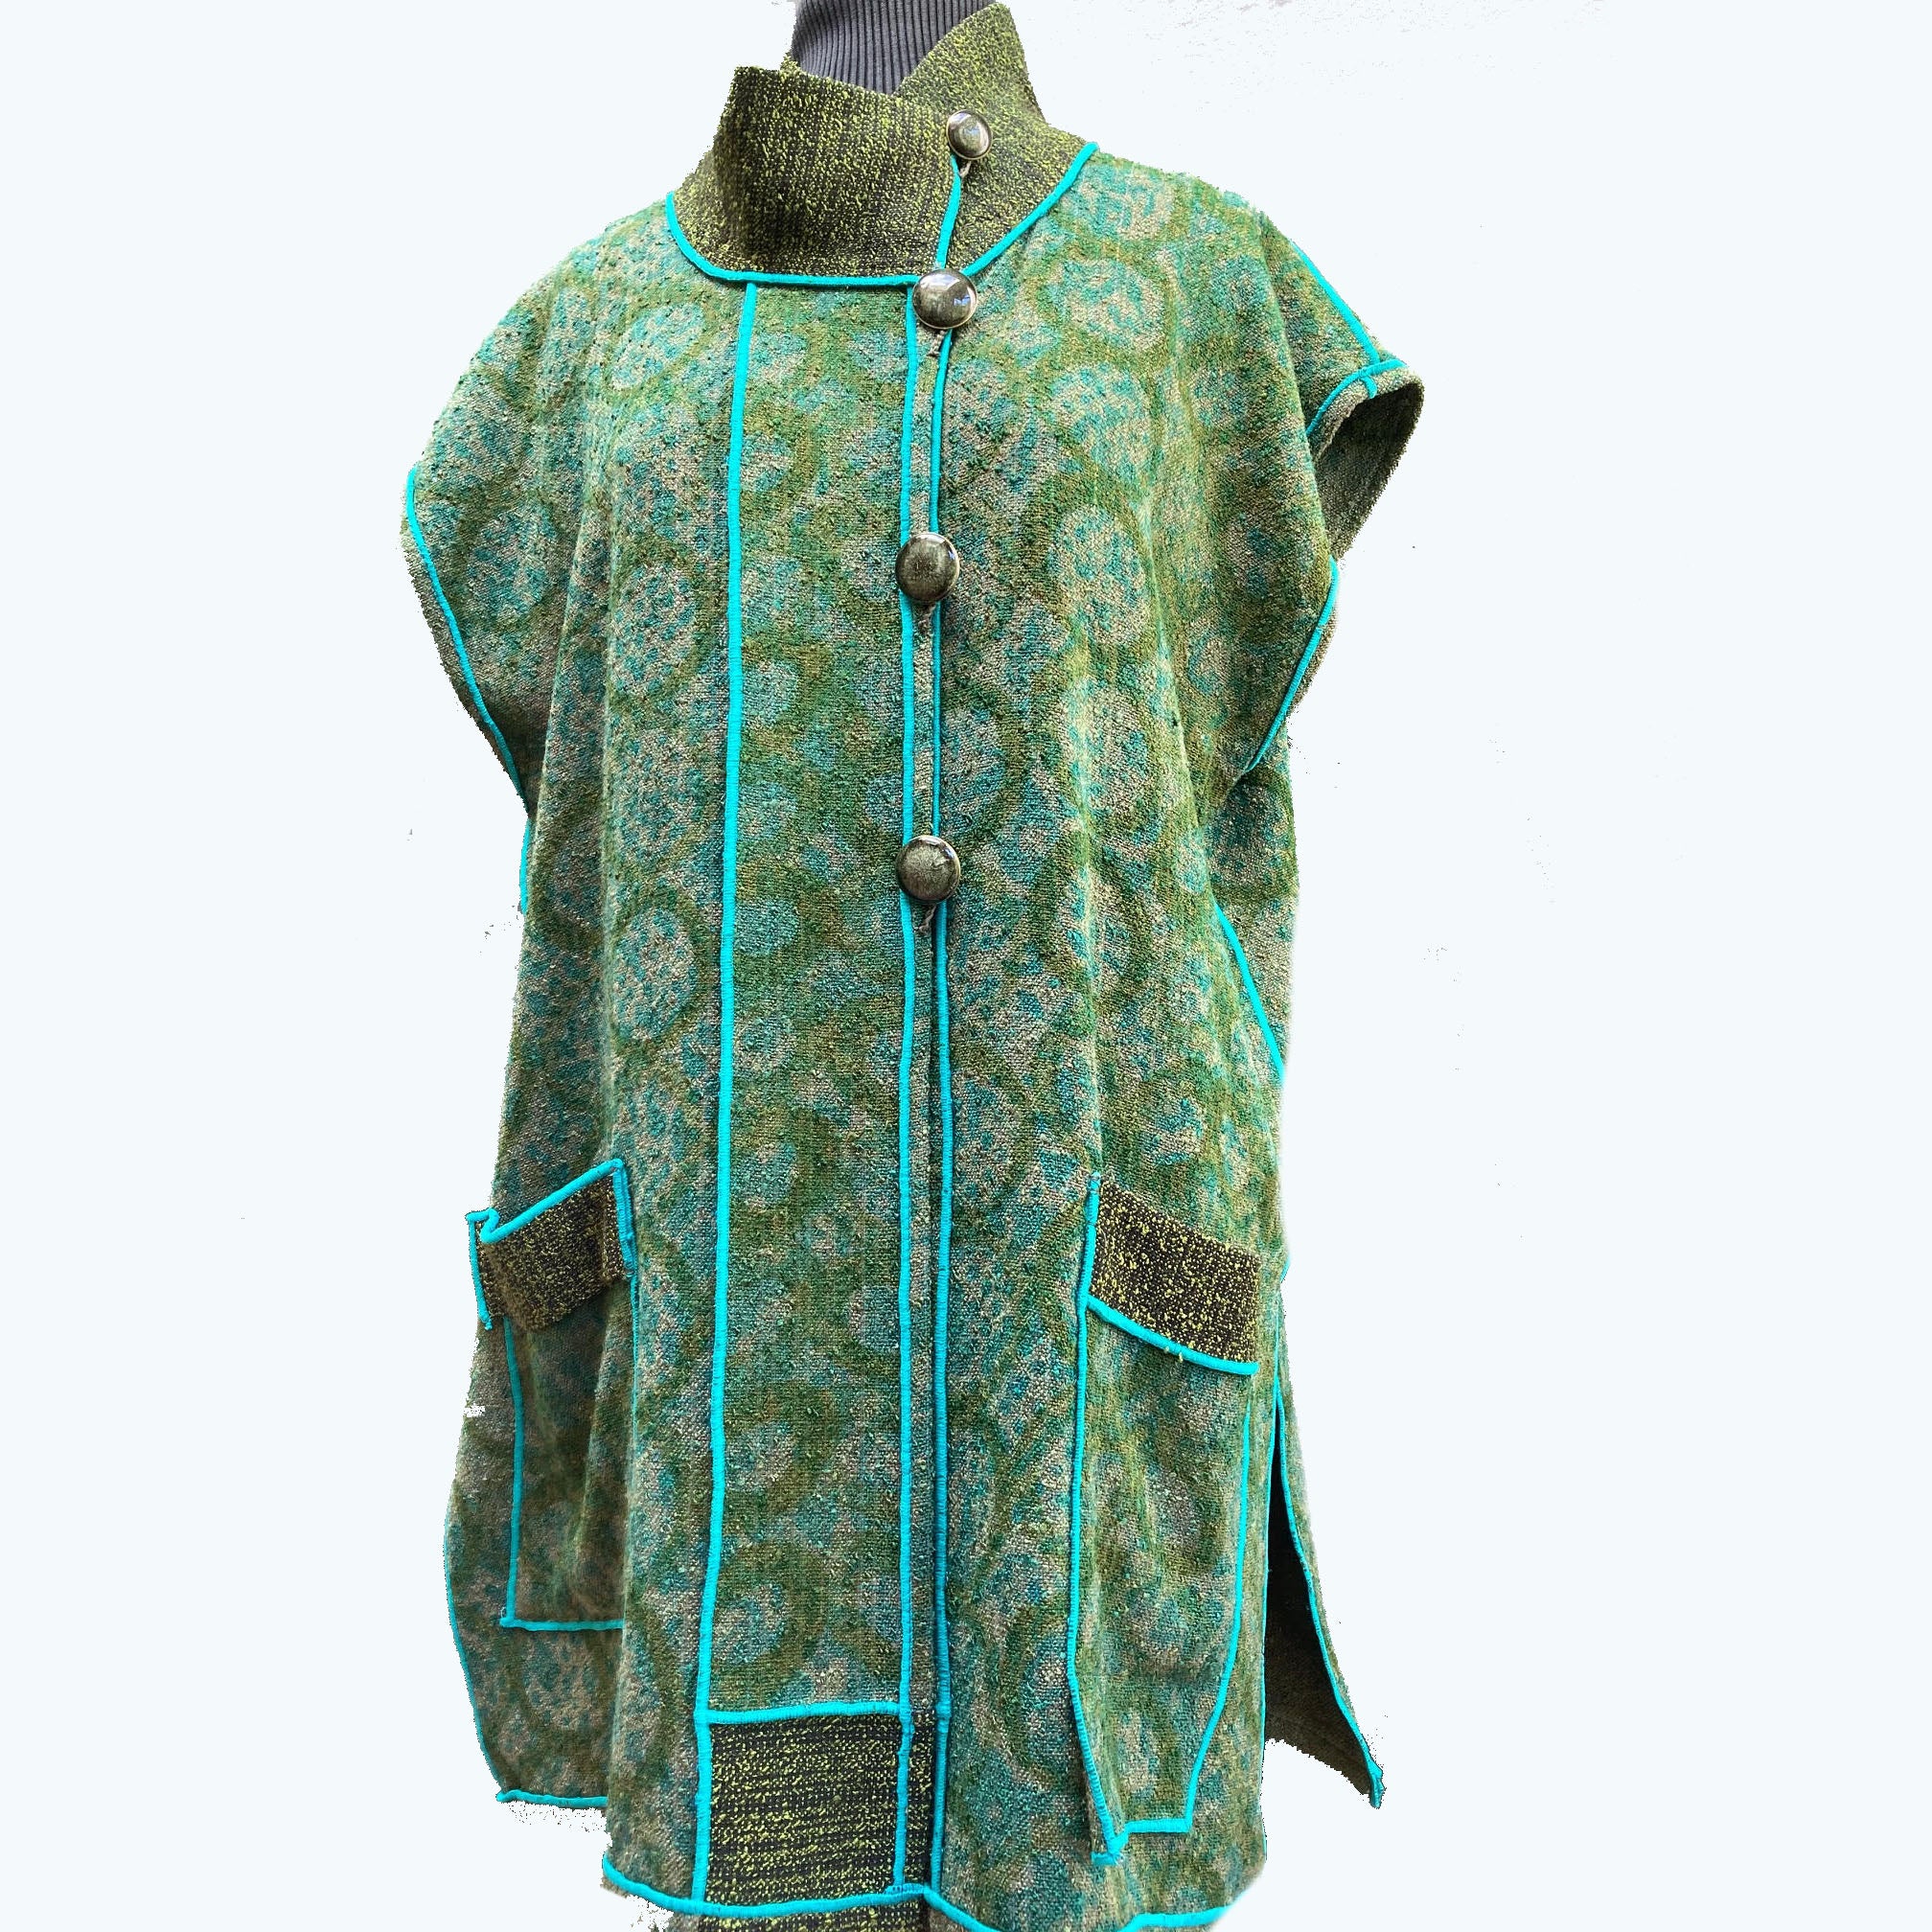 Judith Bird Vest, Long, Green/Turquoise, L